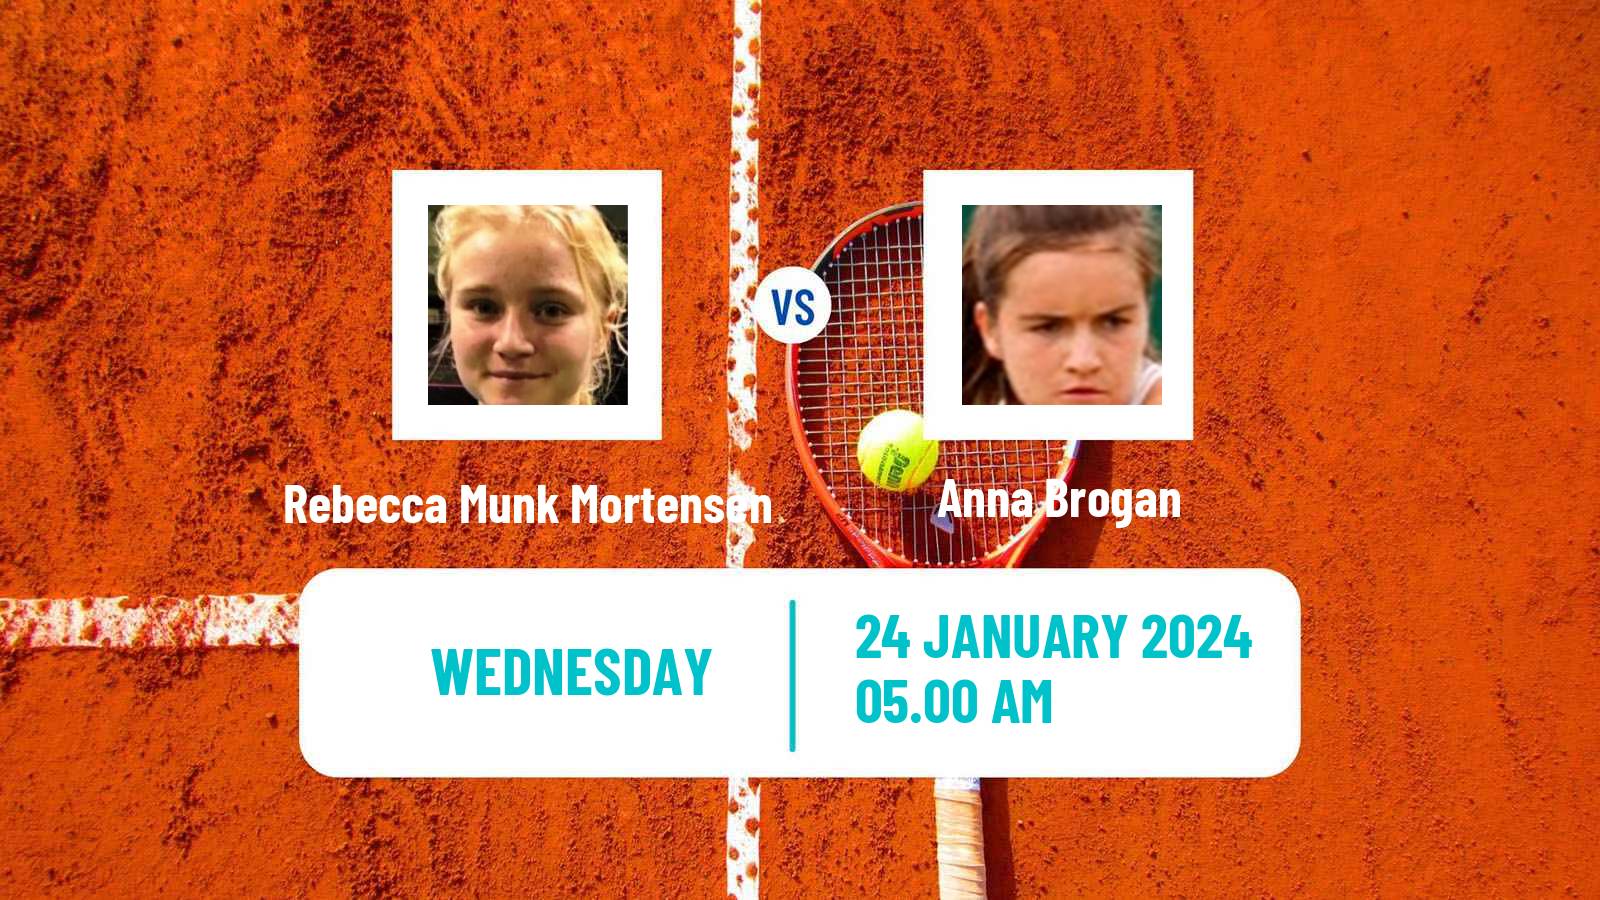 Tennis ITF W35 Monastir 2 Women Rebecca Munk Mortensen - Anna Brogan